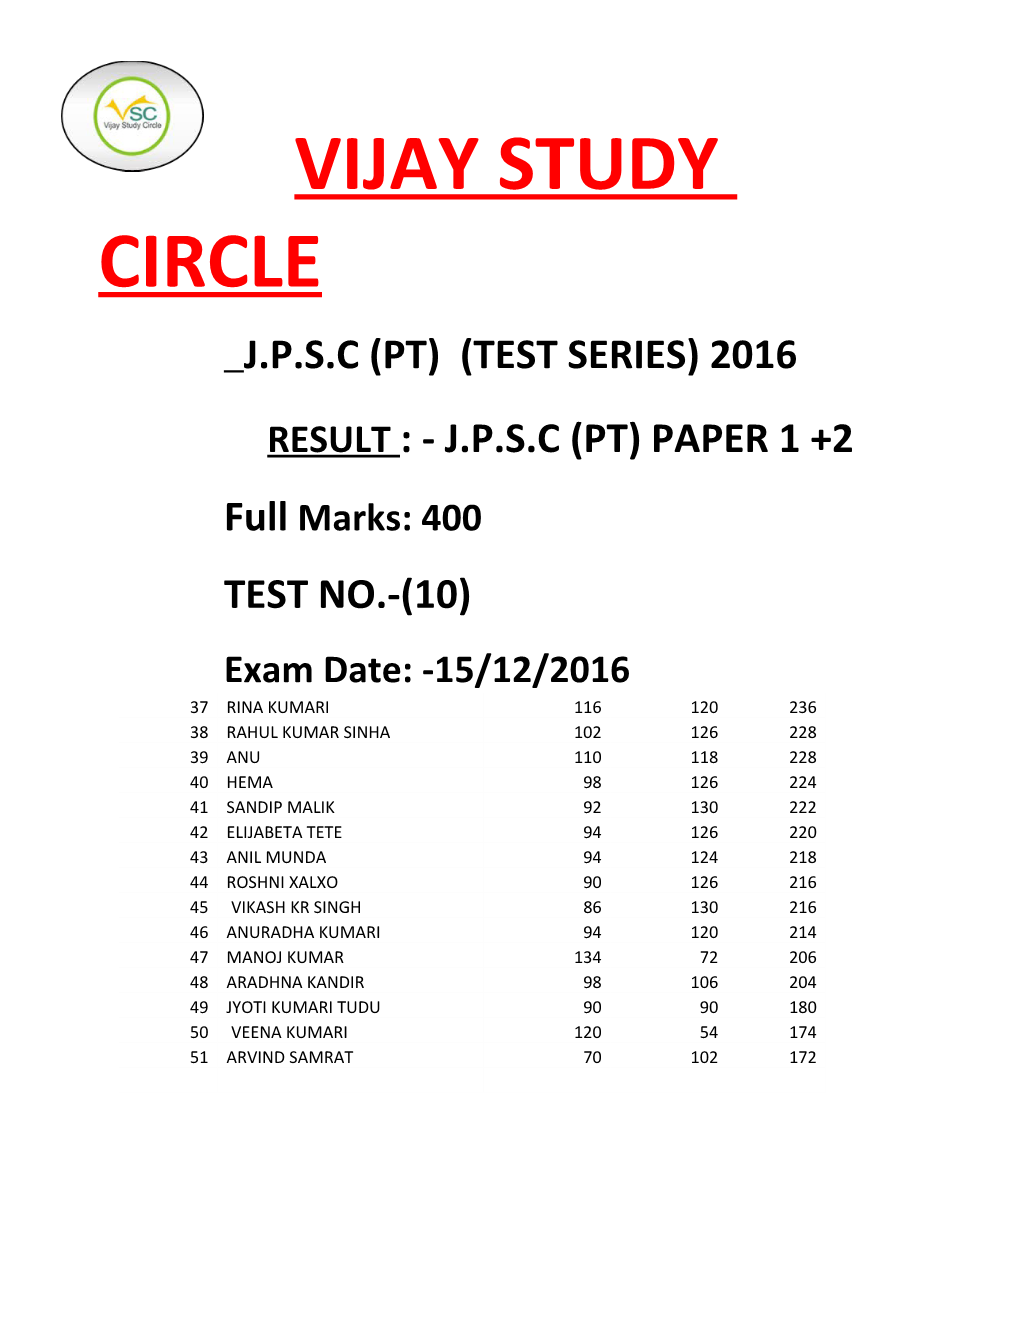 J.P.S.C (Pt) (Test Series) 2016